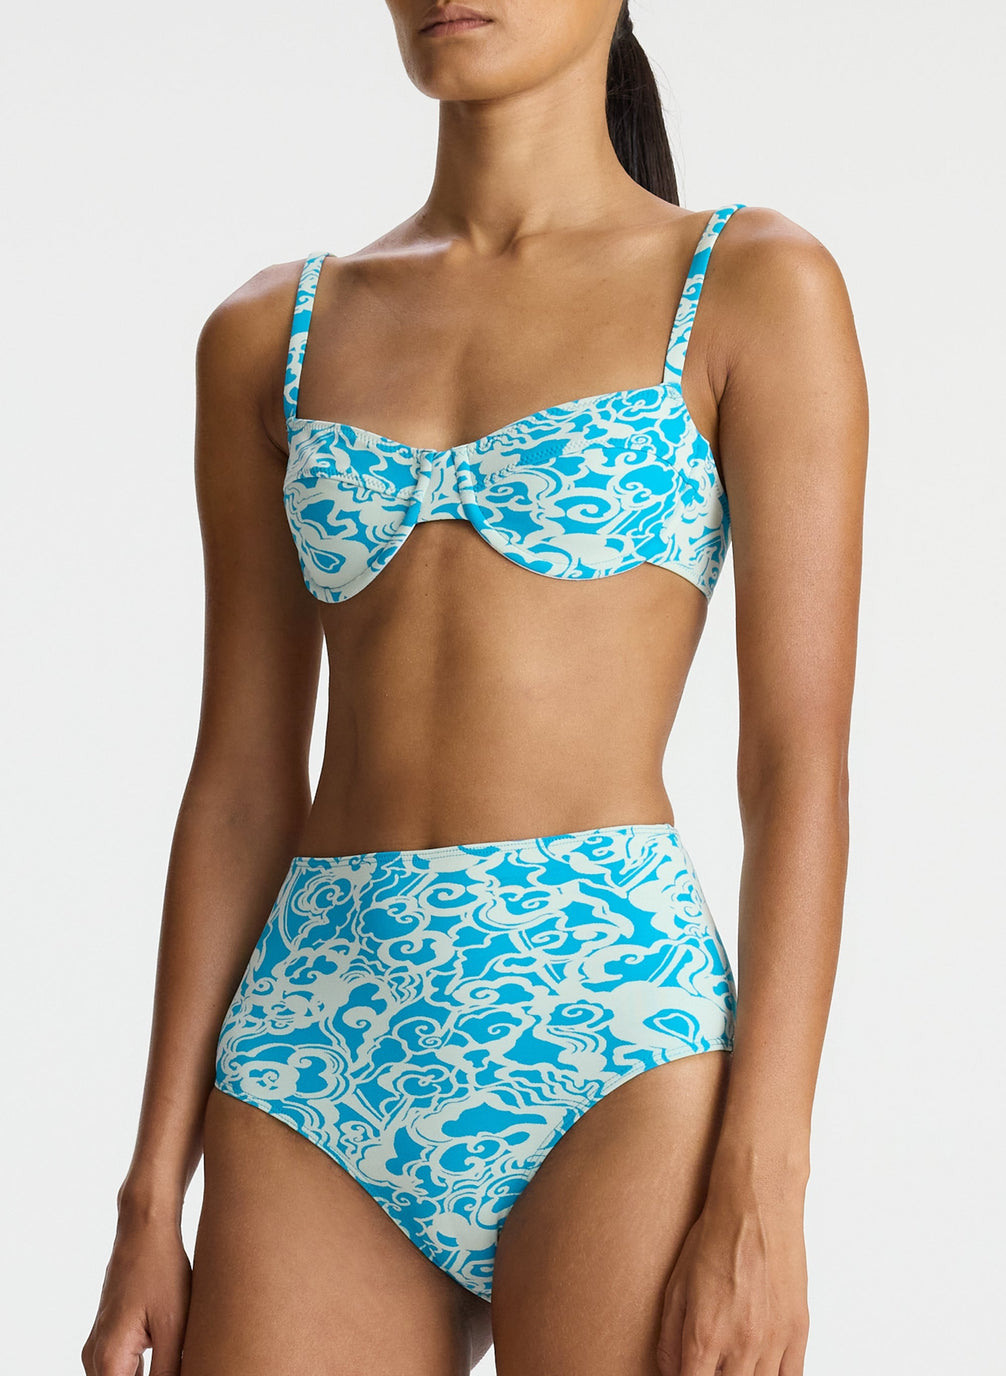 detail view of woman wearing aqua print bikini set